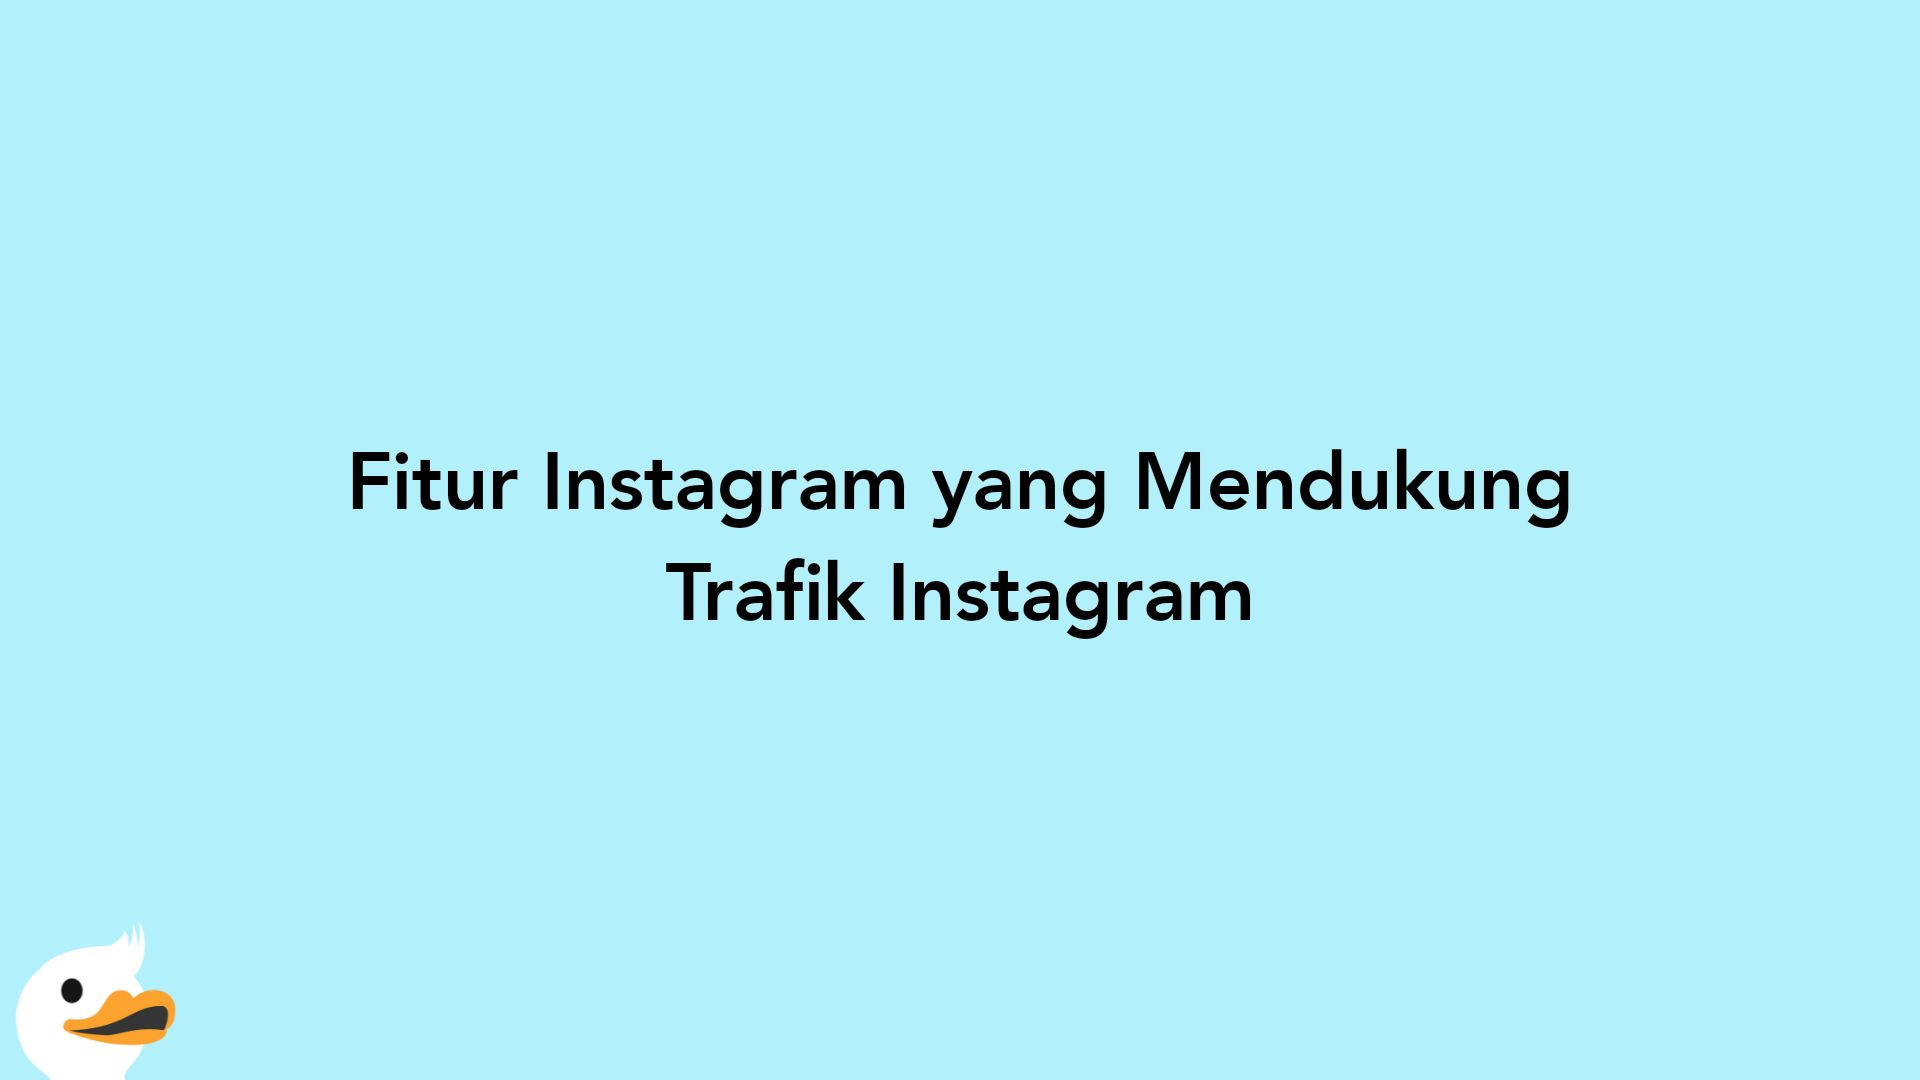 Fitur Instagram yang Mendukung Trafik Instagram